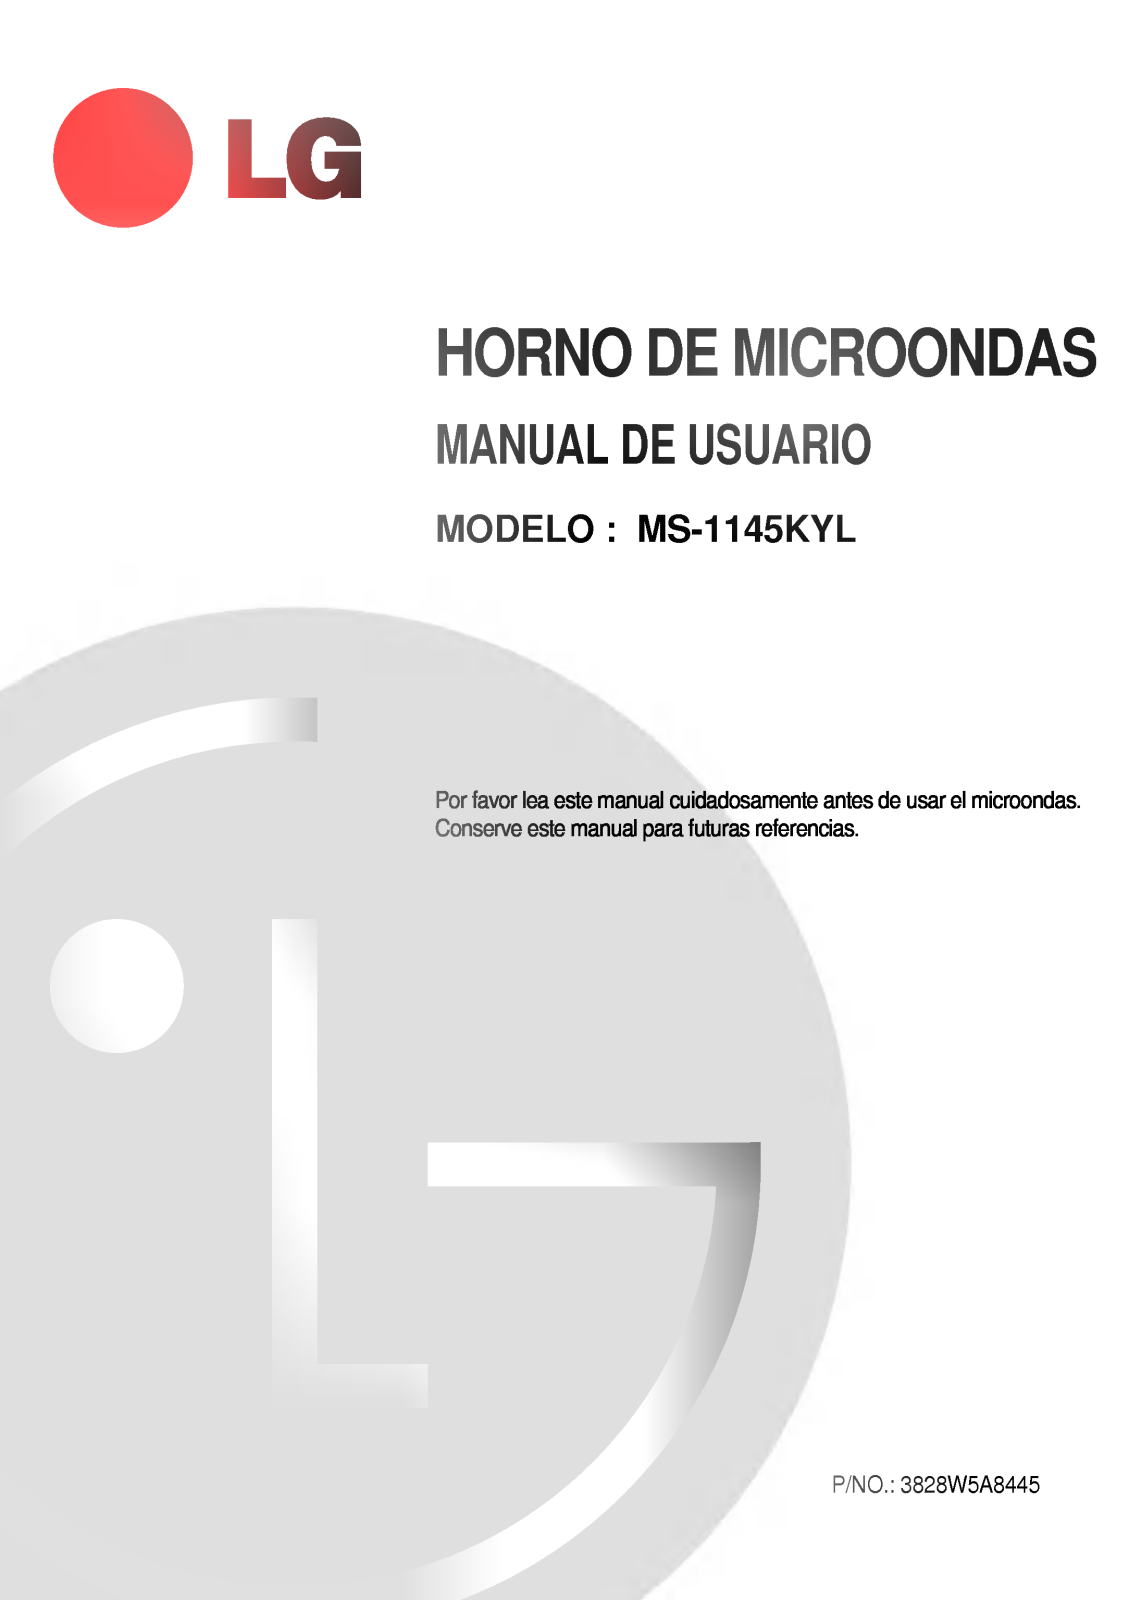 LG MS-1145KYL Owner's Manual